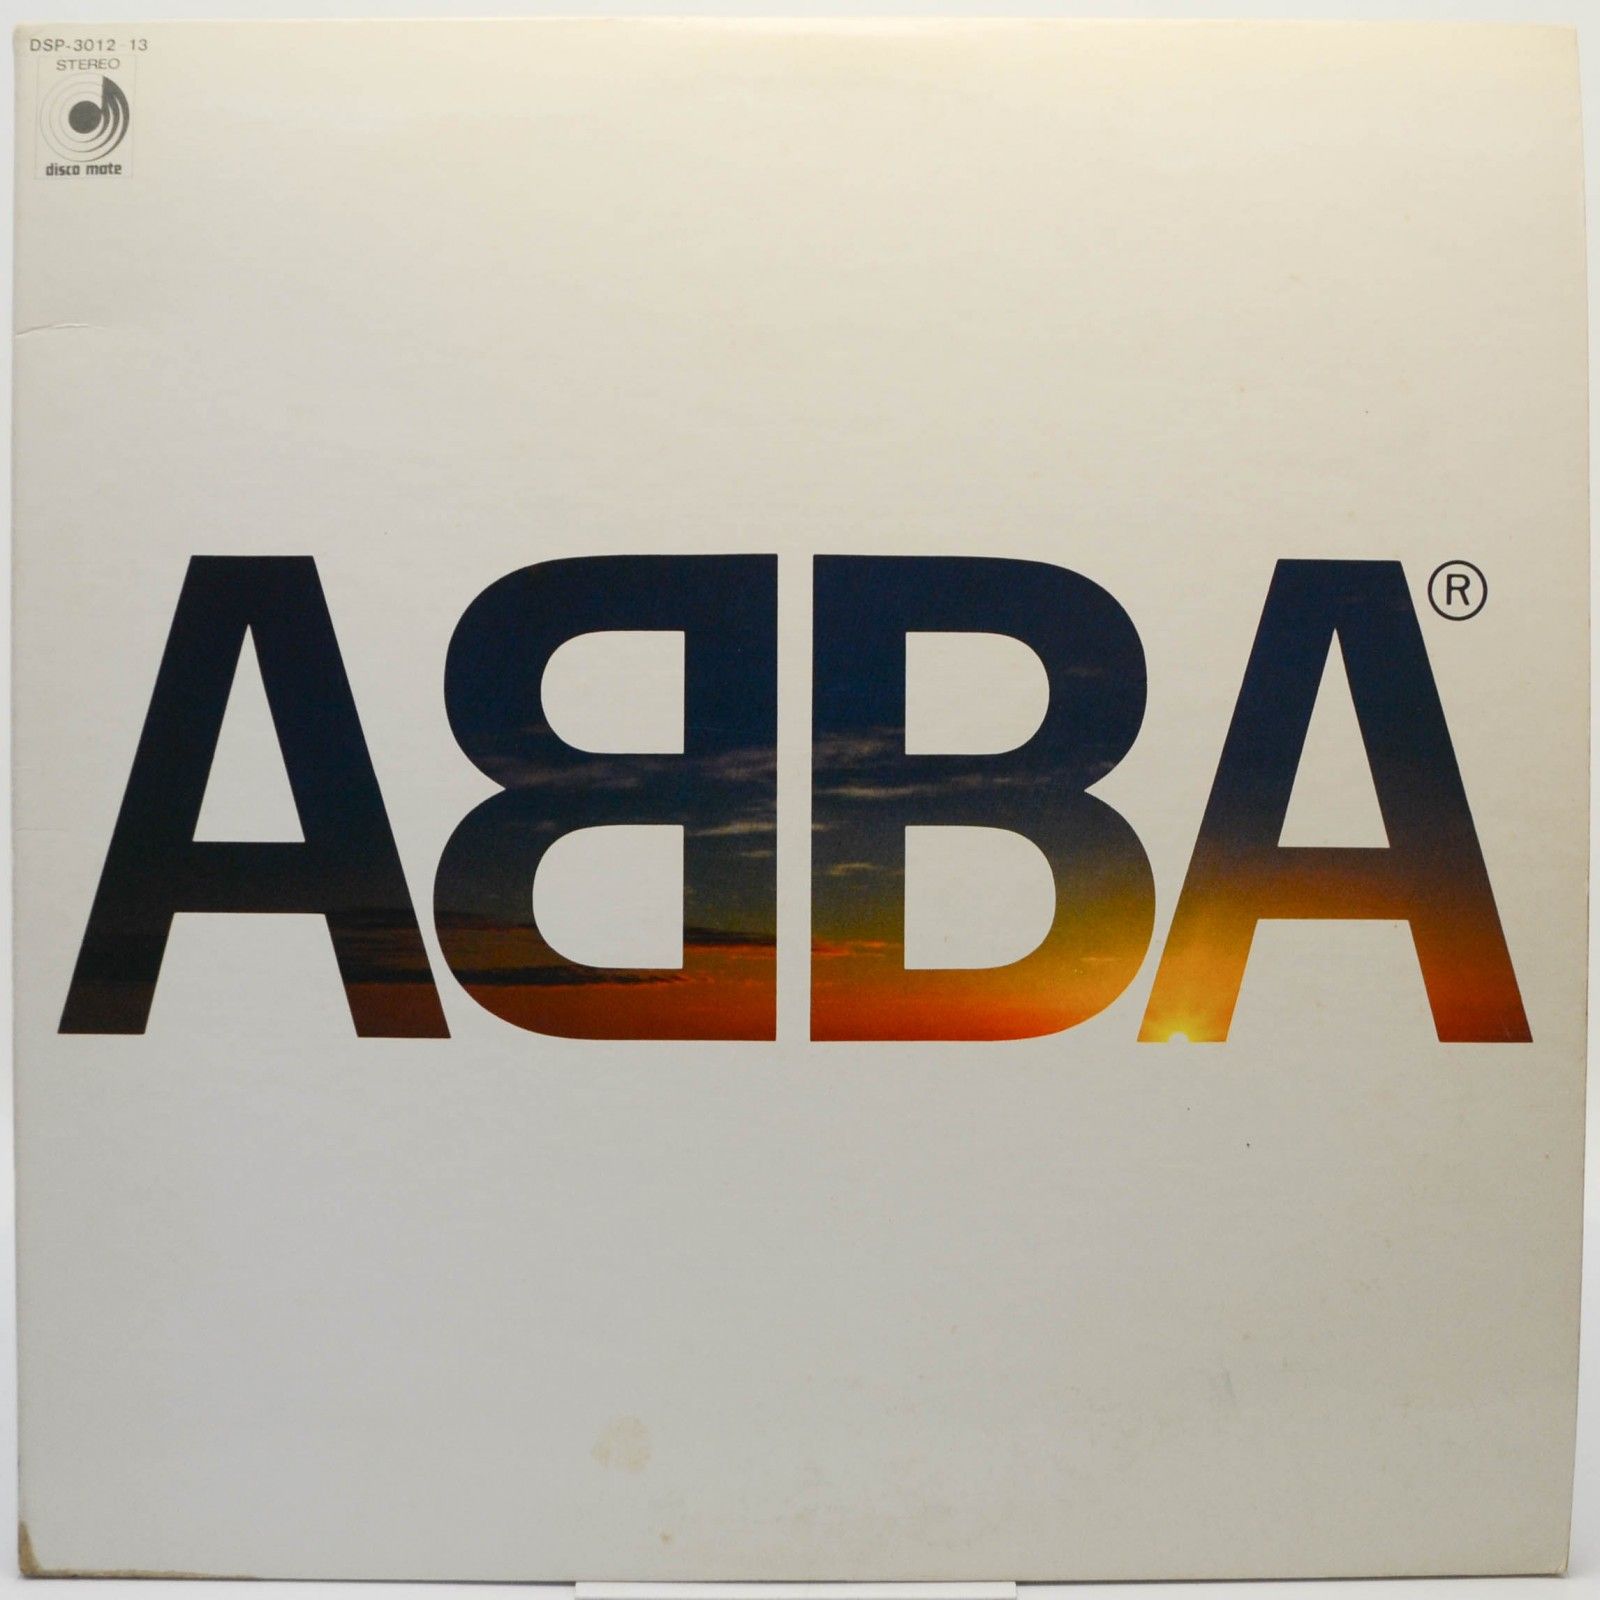 ABBA — ABBA's Greatest Hits 24 (2LP), 1977